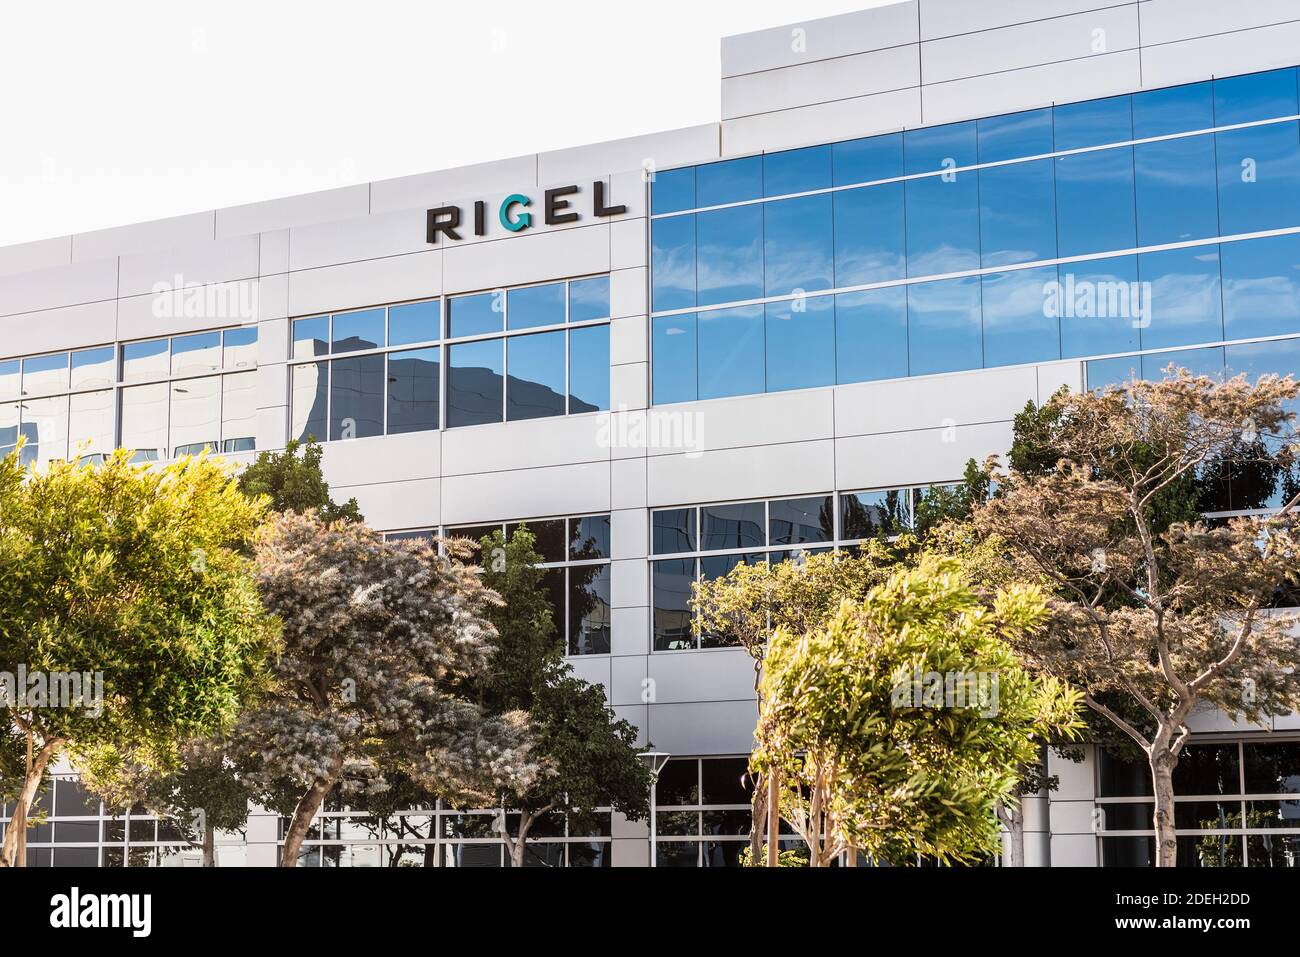 Sep 21, 2020 South San Francisco / CA / USA Rigel HQ in Silicon